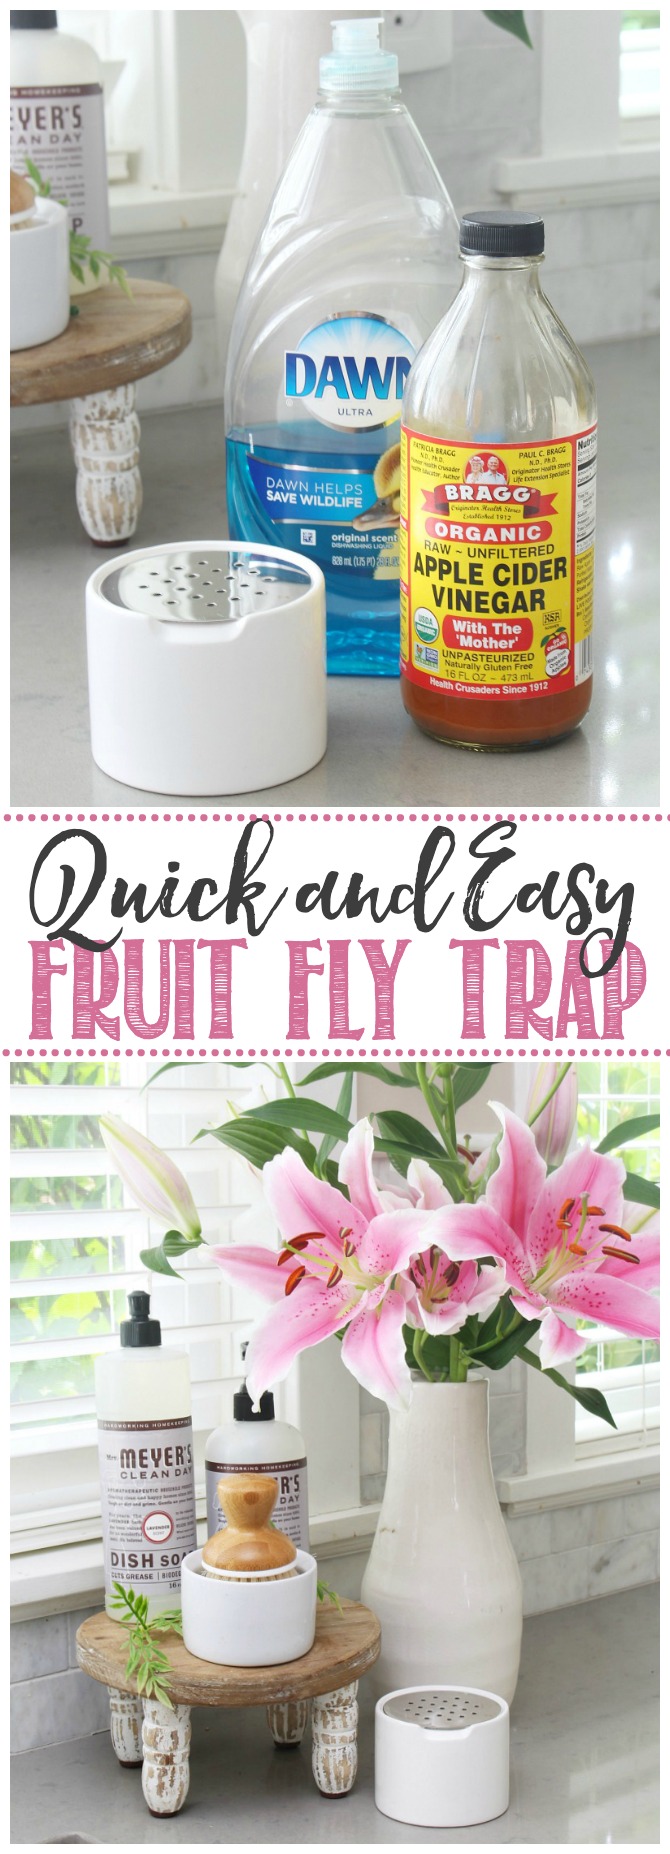 DIY fruit fly trap to get rid of fruit flies sitting beside kitchen sink.